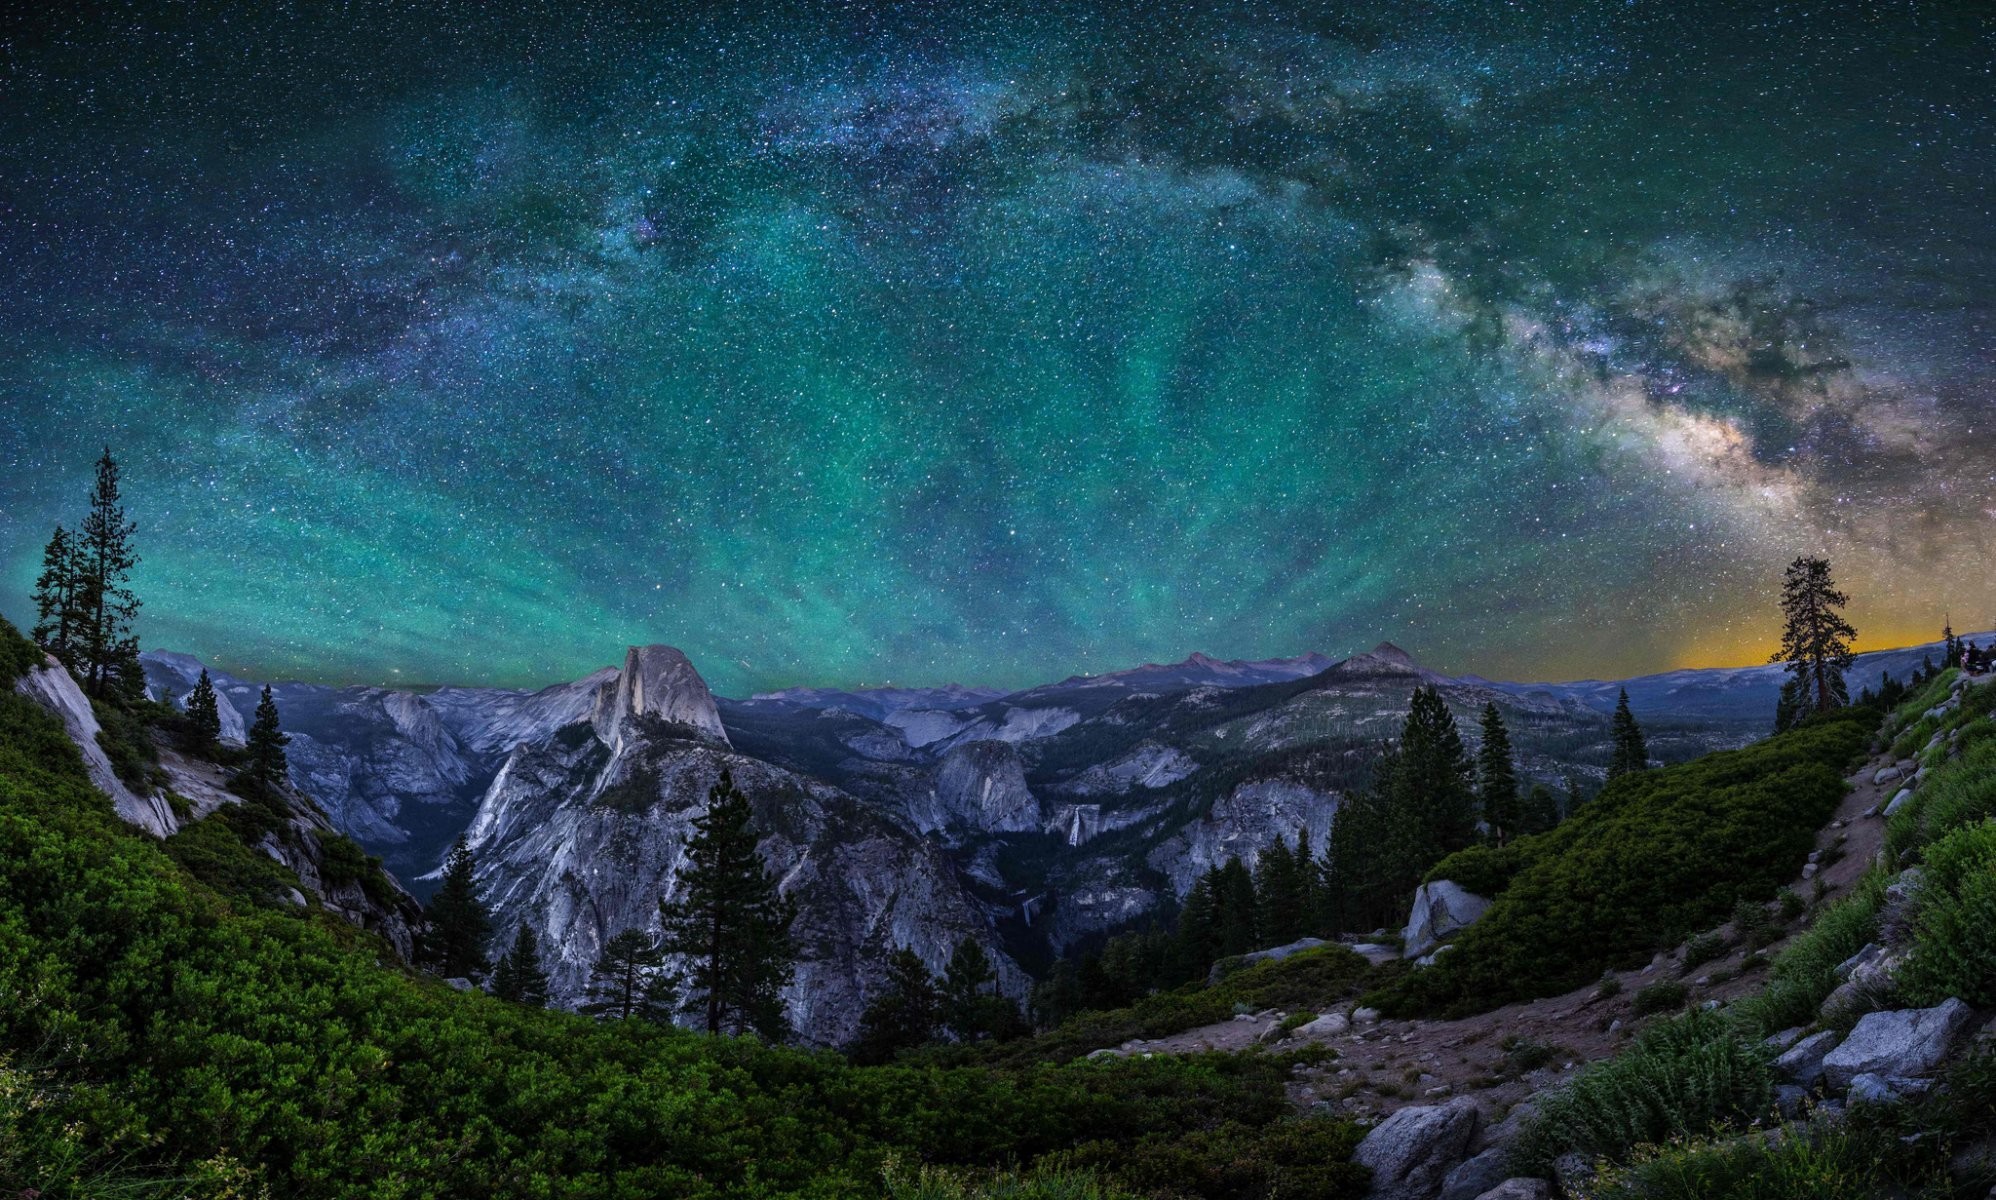 1996x1200 united states california yosemite national park mountain night sky star glow